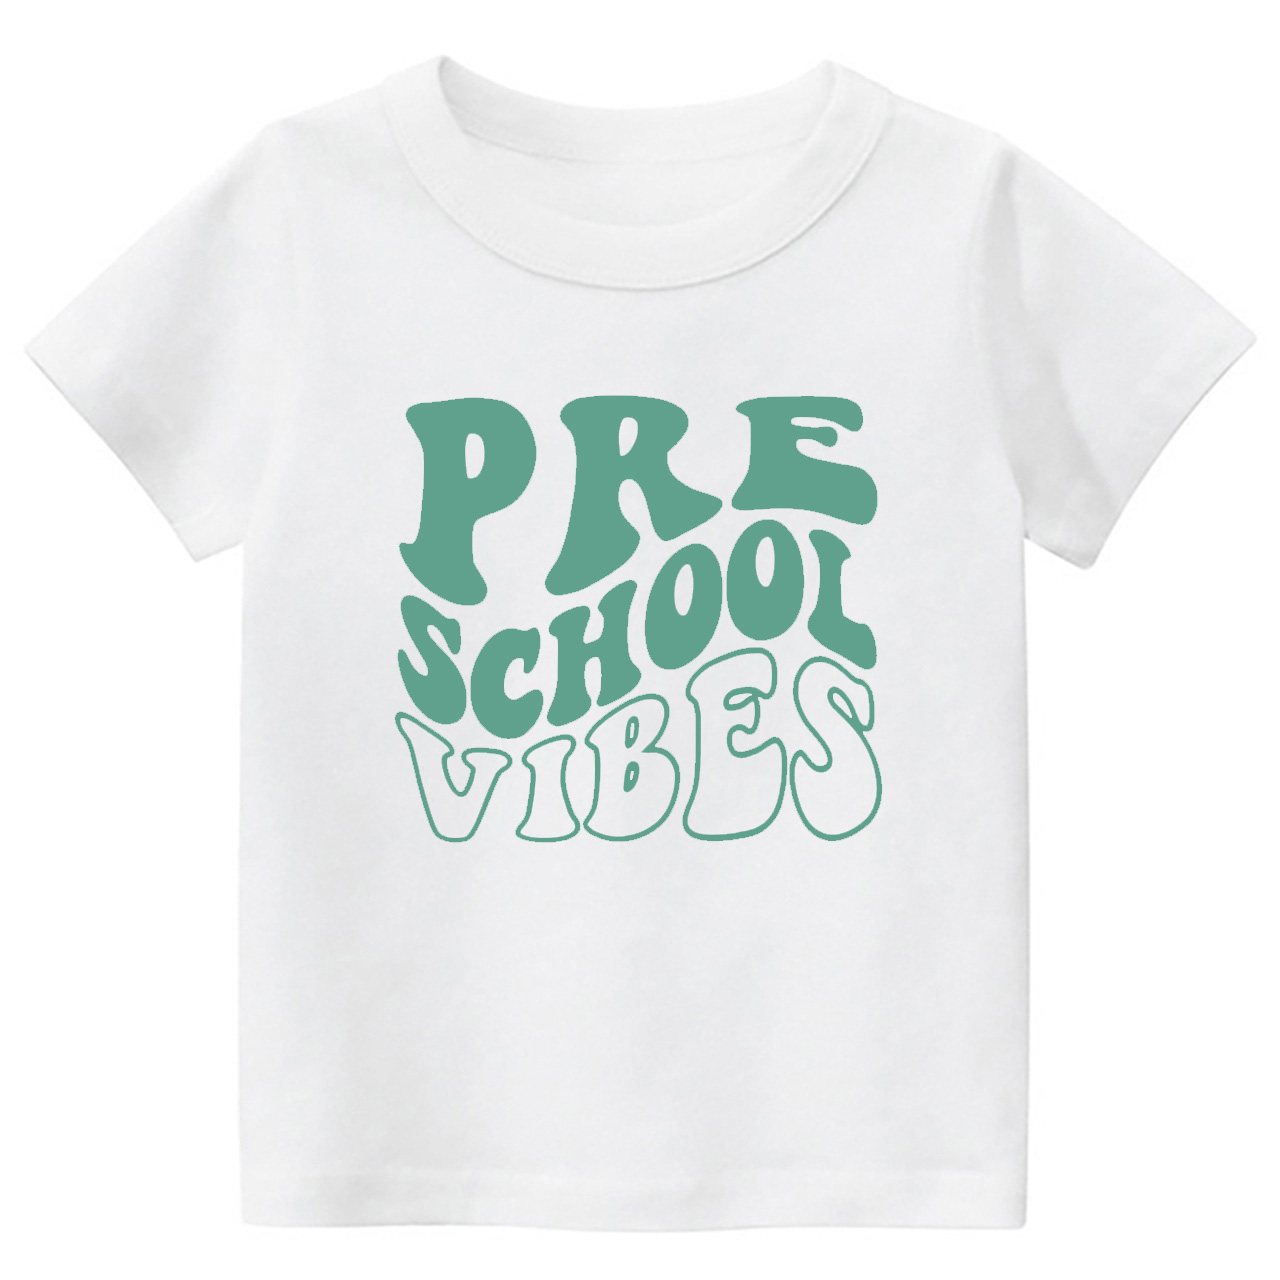 Back to School - Preschool Vibes Kids Shirts